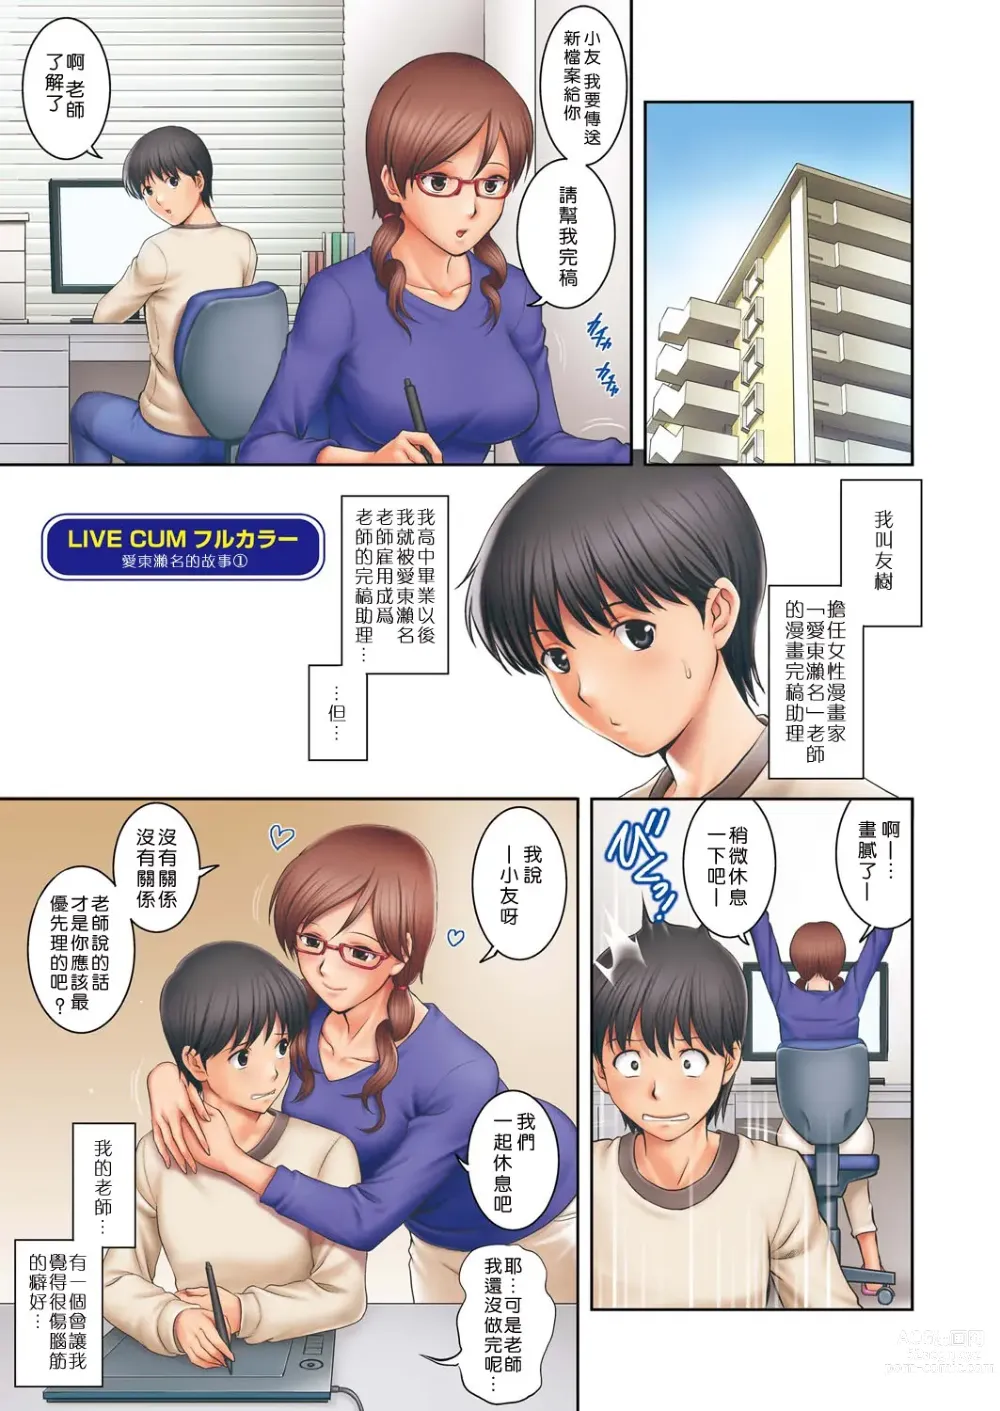 Page 4 of manga LIVE CUM